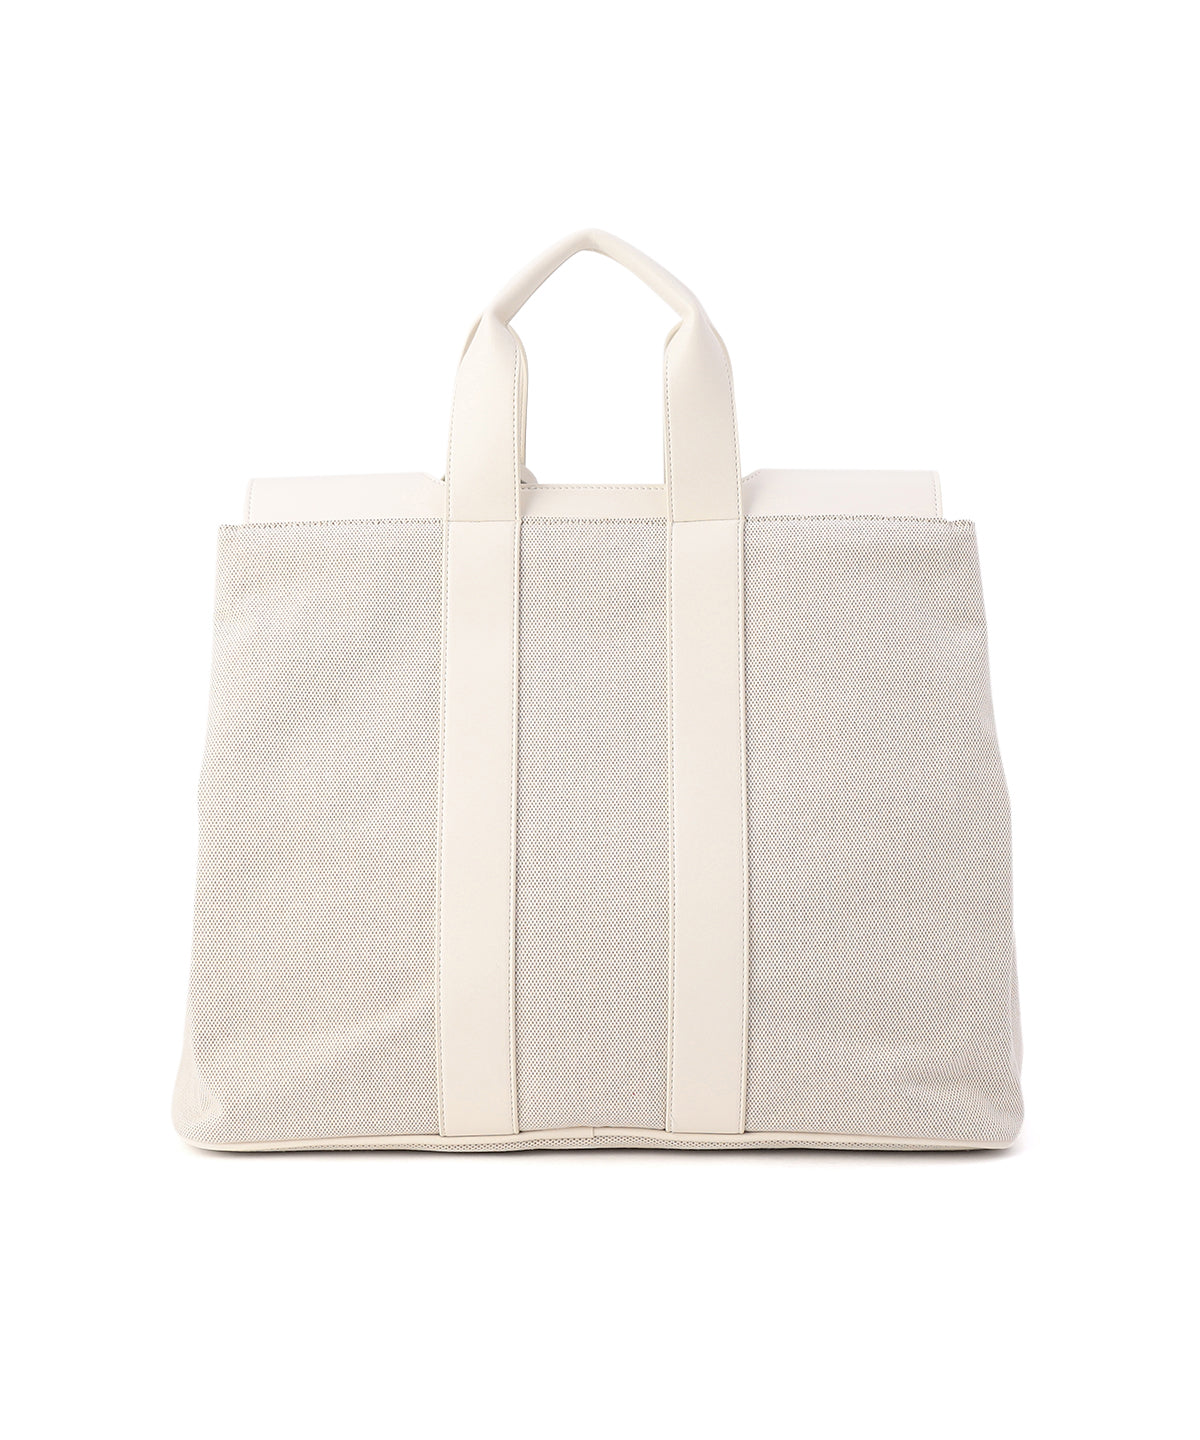 Two Tone Kente Bag (Large)WHITE